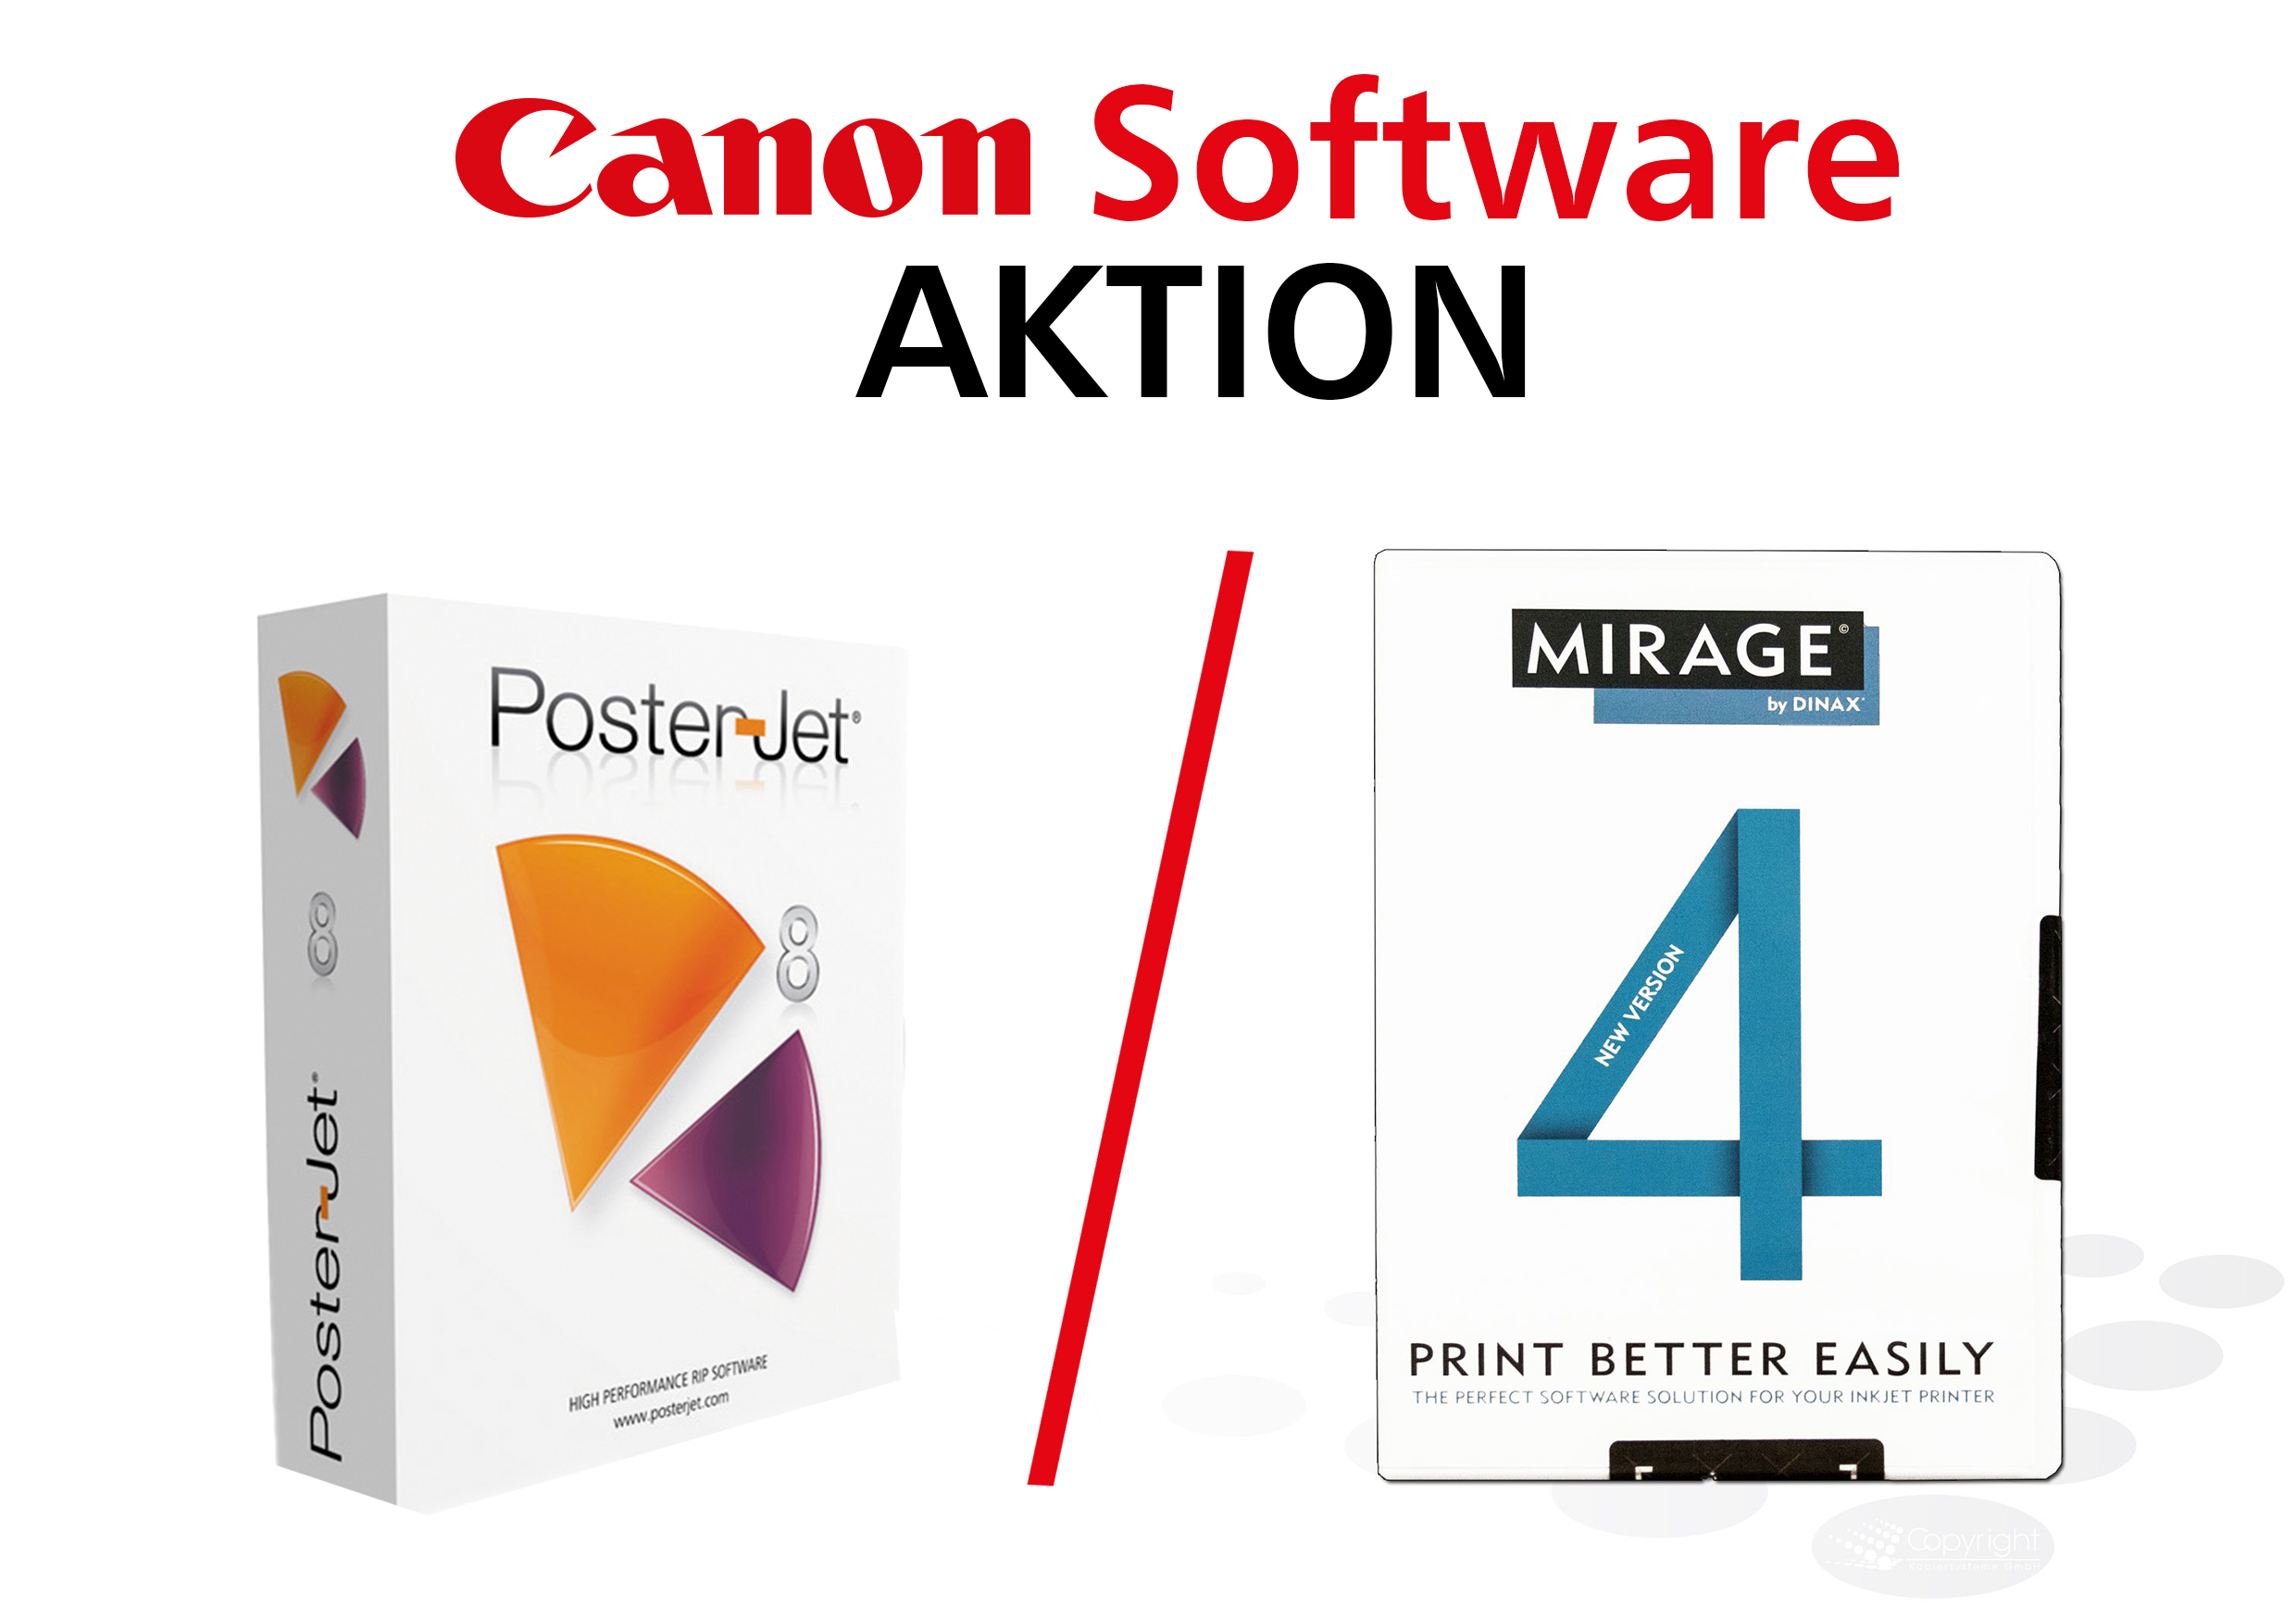 Canon Software Aktion